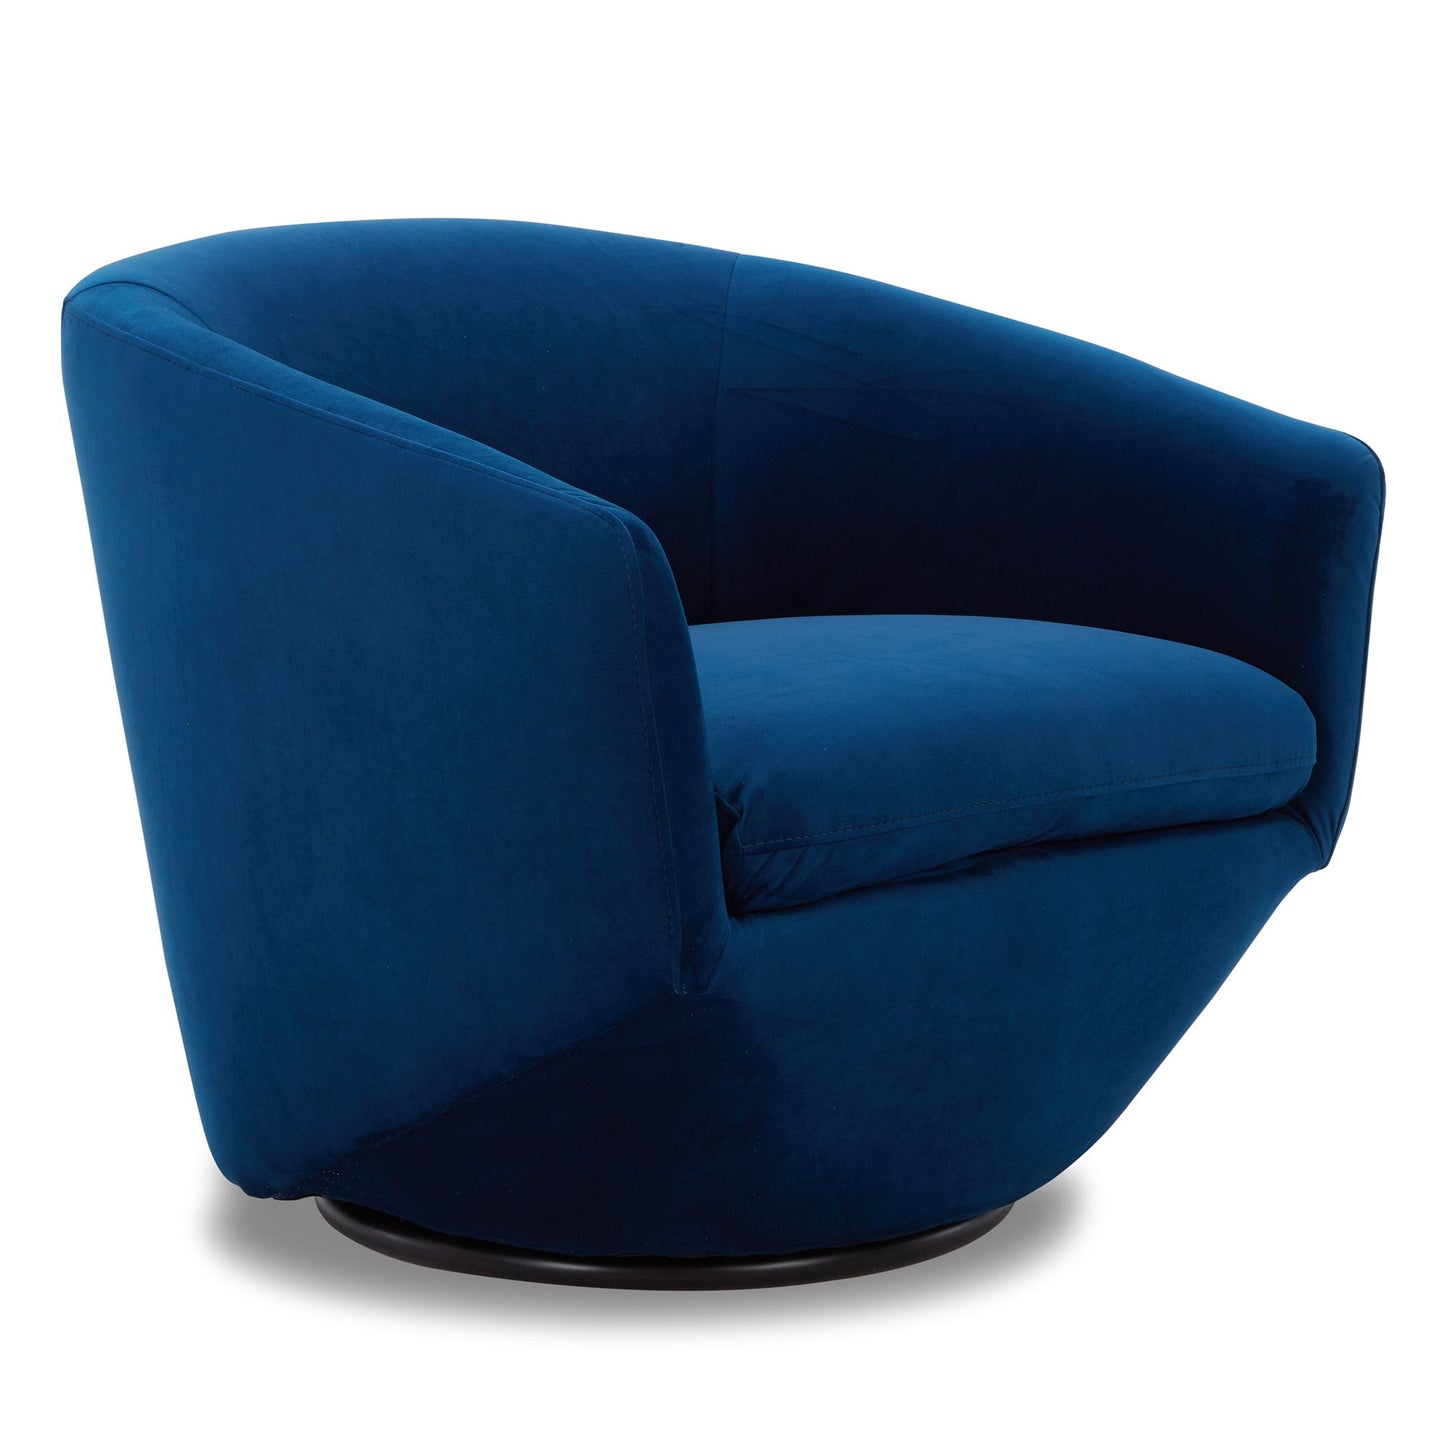 CHITA LIVING-Aria Swivel Arm Accent Chair-Accent Chair-Velvet-Blue-